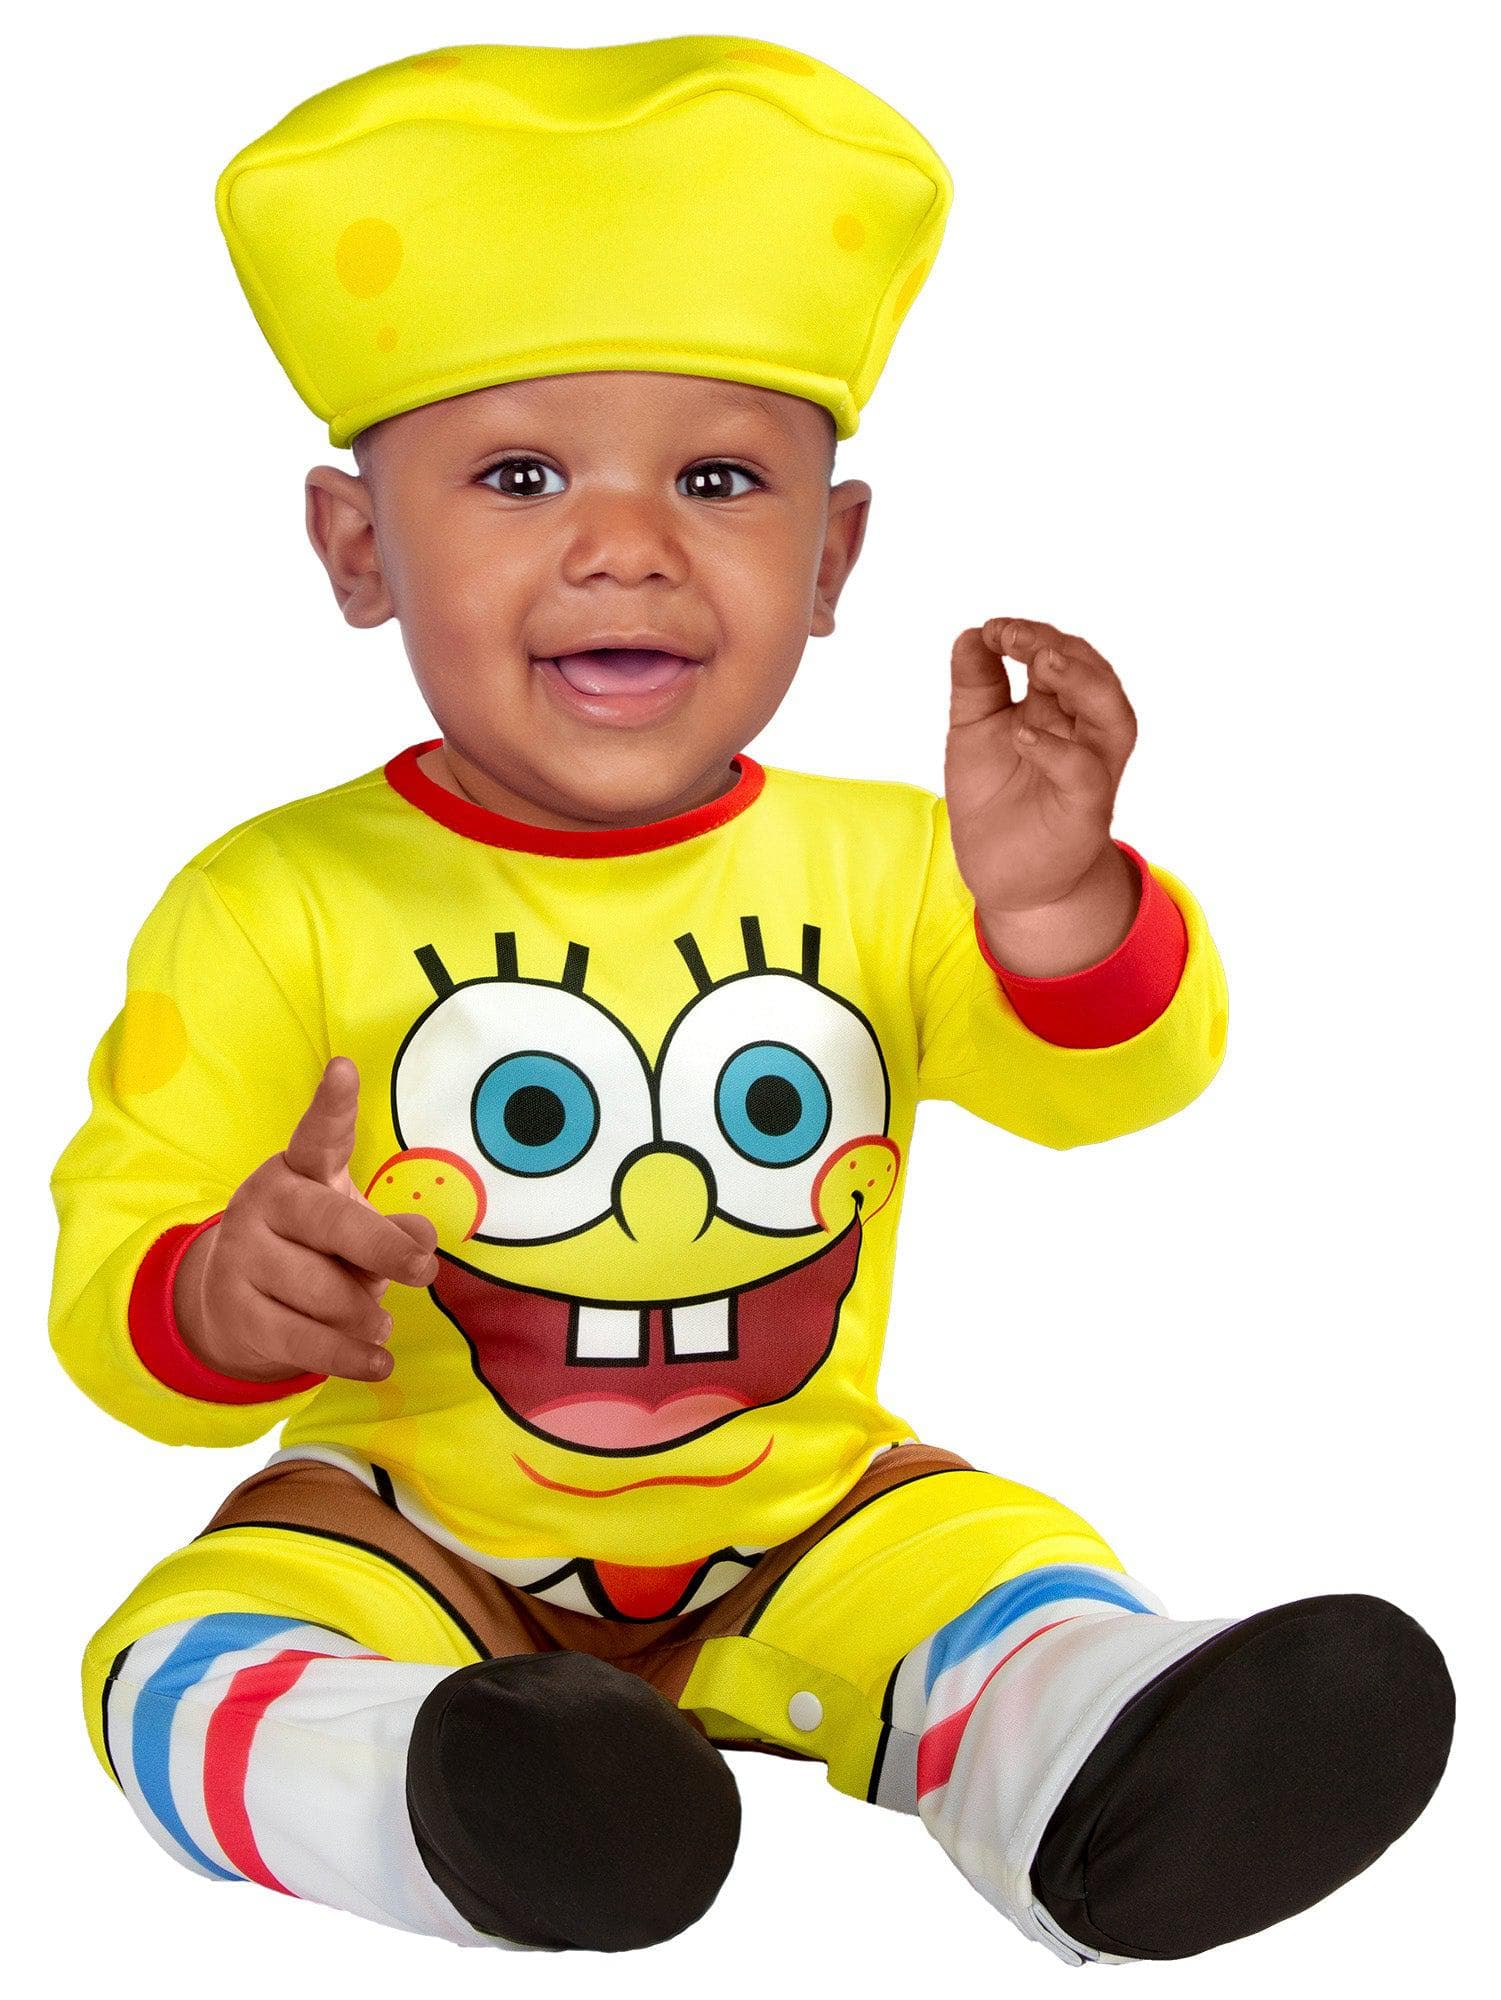 SpongeBob SquarePants Baby Costume - costumes.com